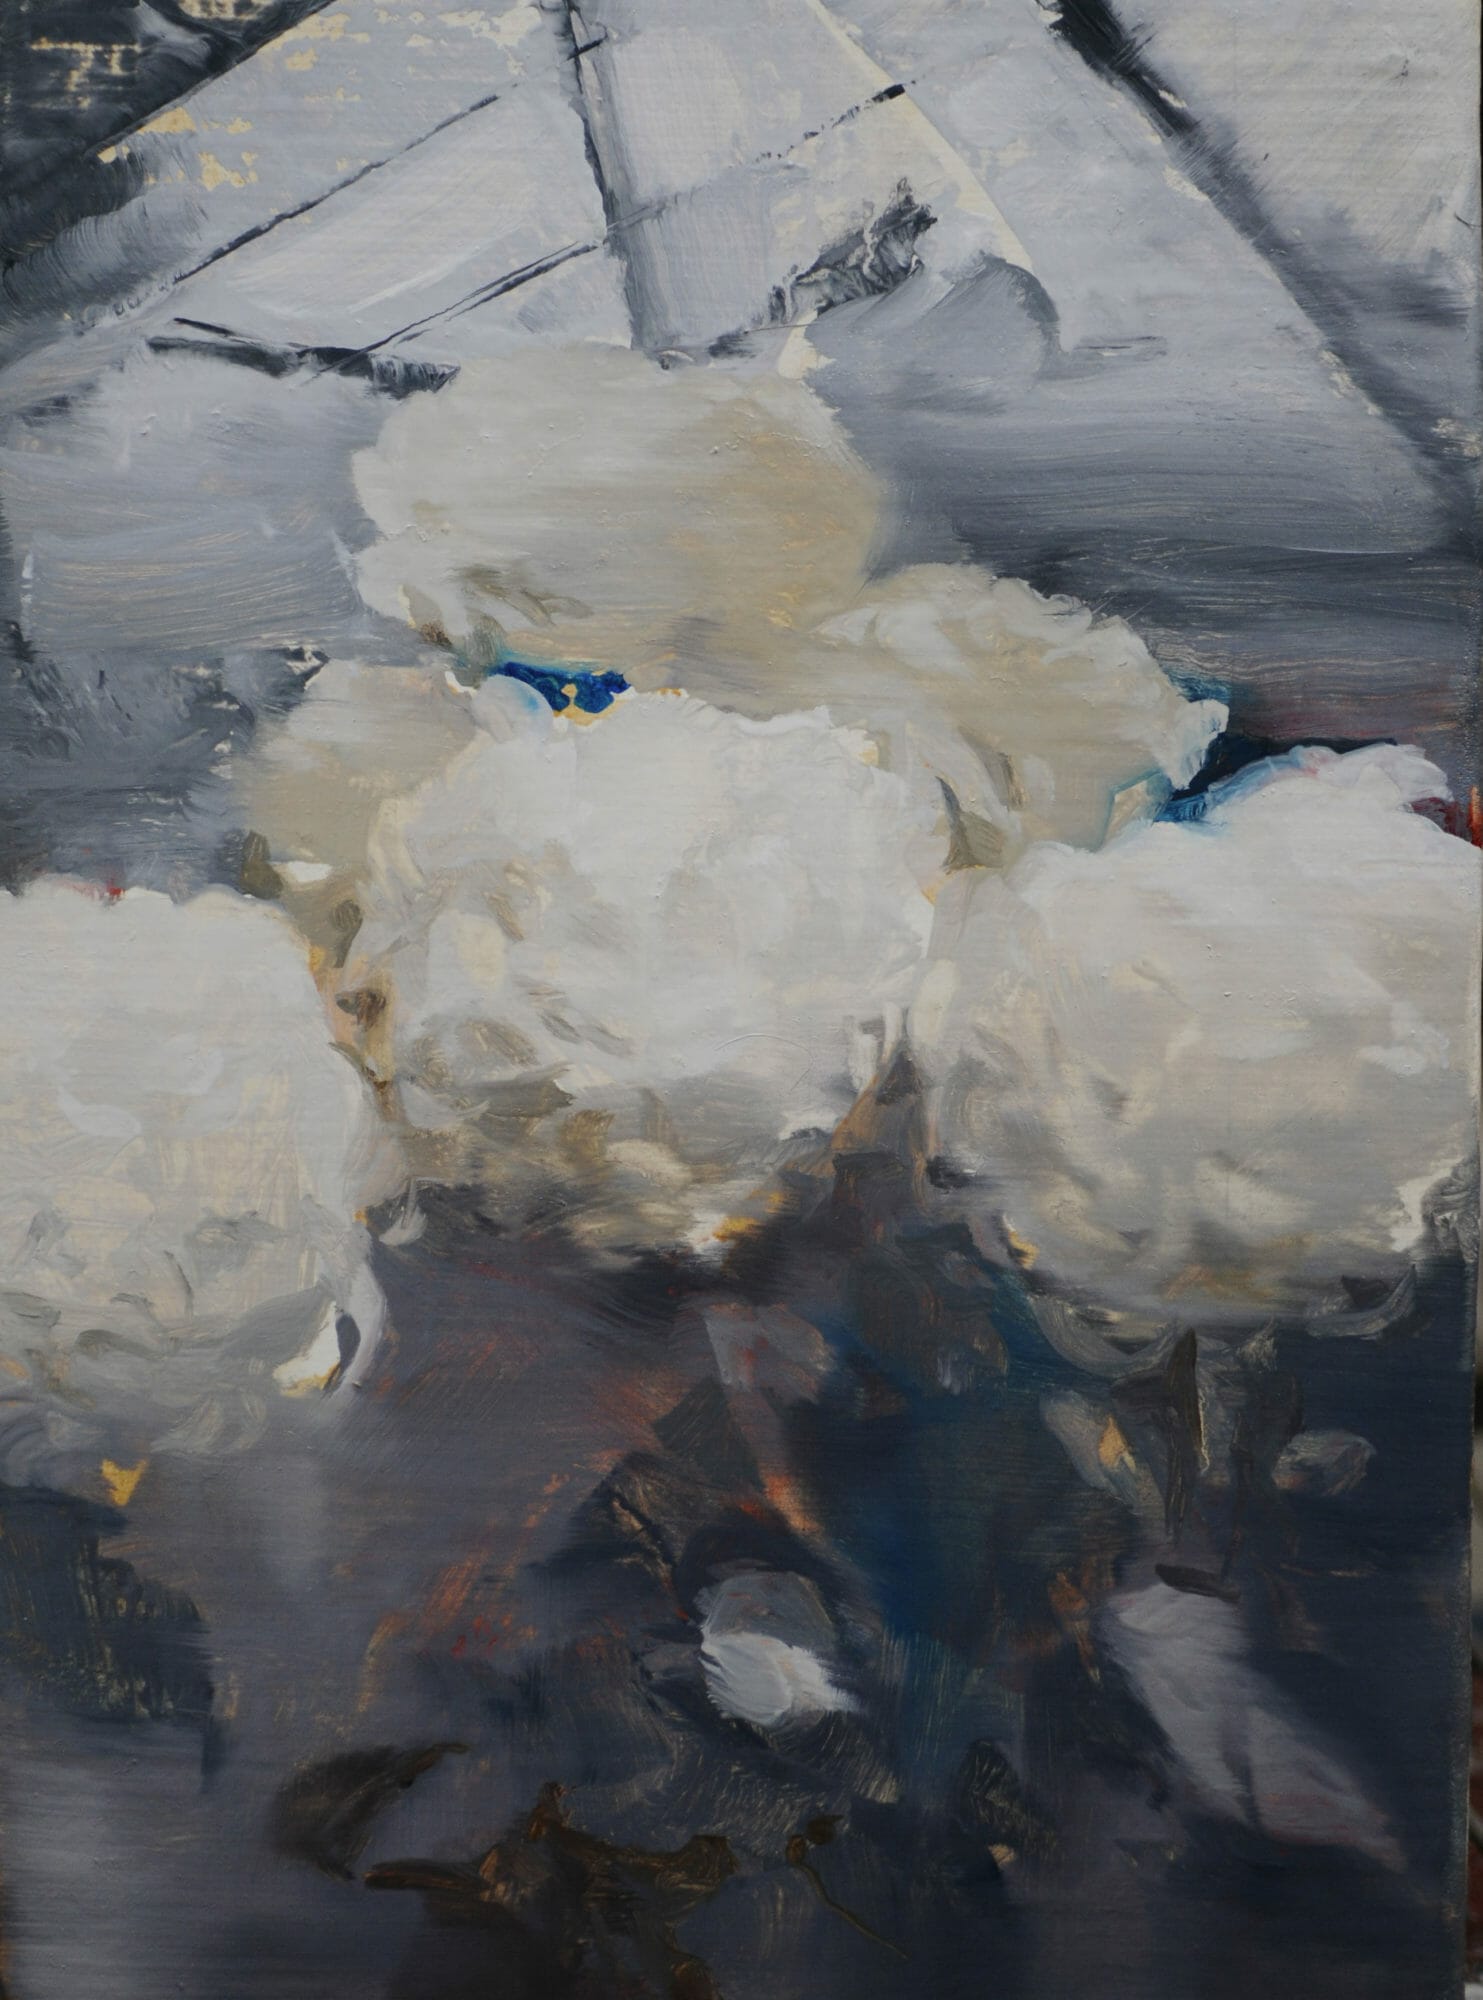 Francois Jacob JARDIN 25 x18 cm - oil on canvas - 2019